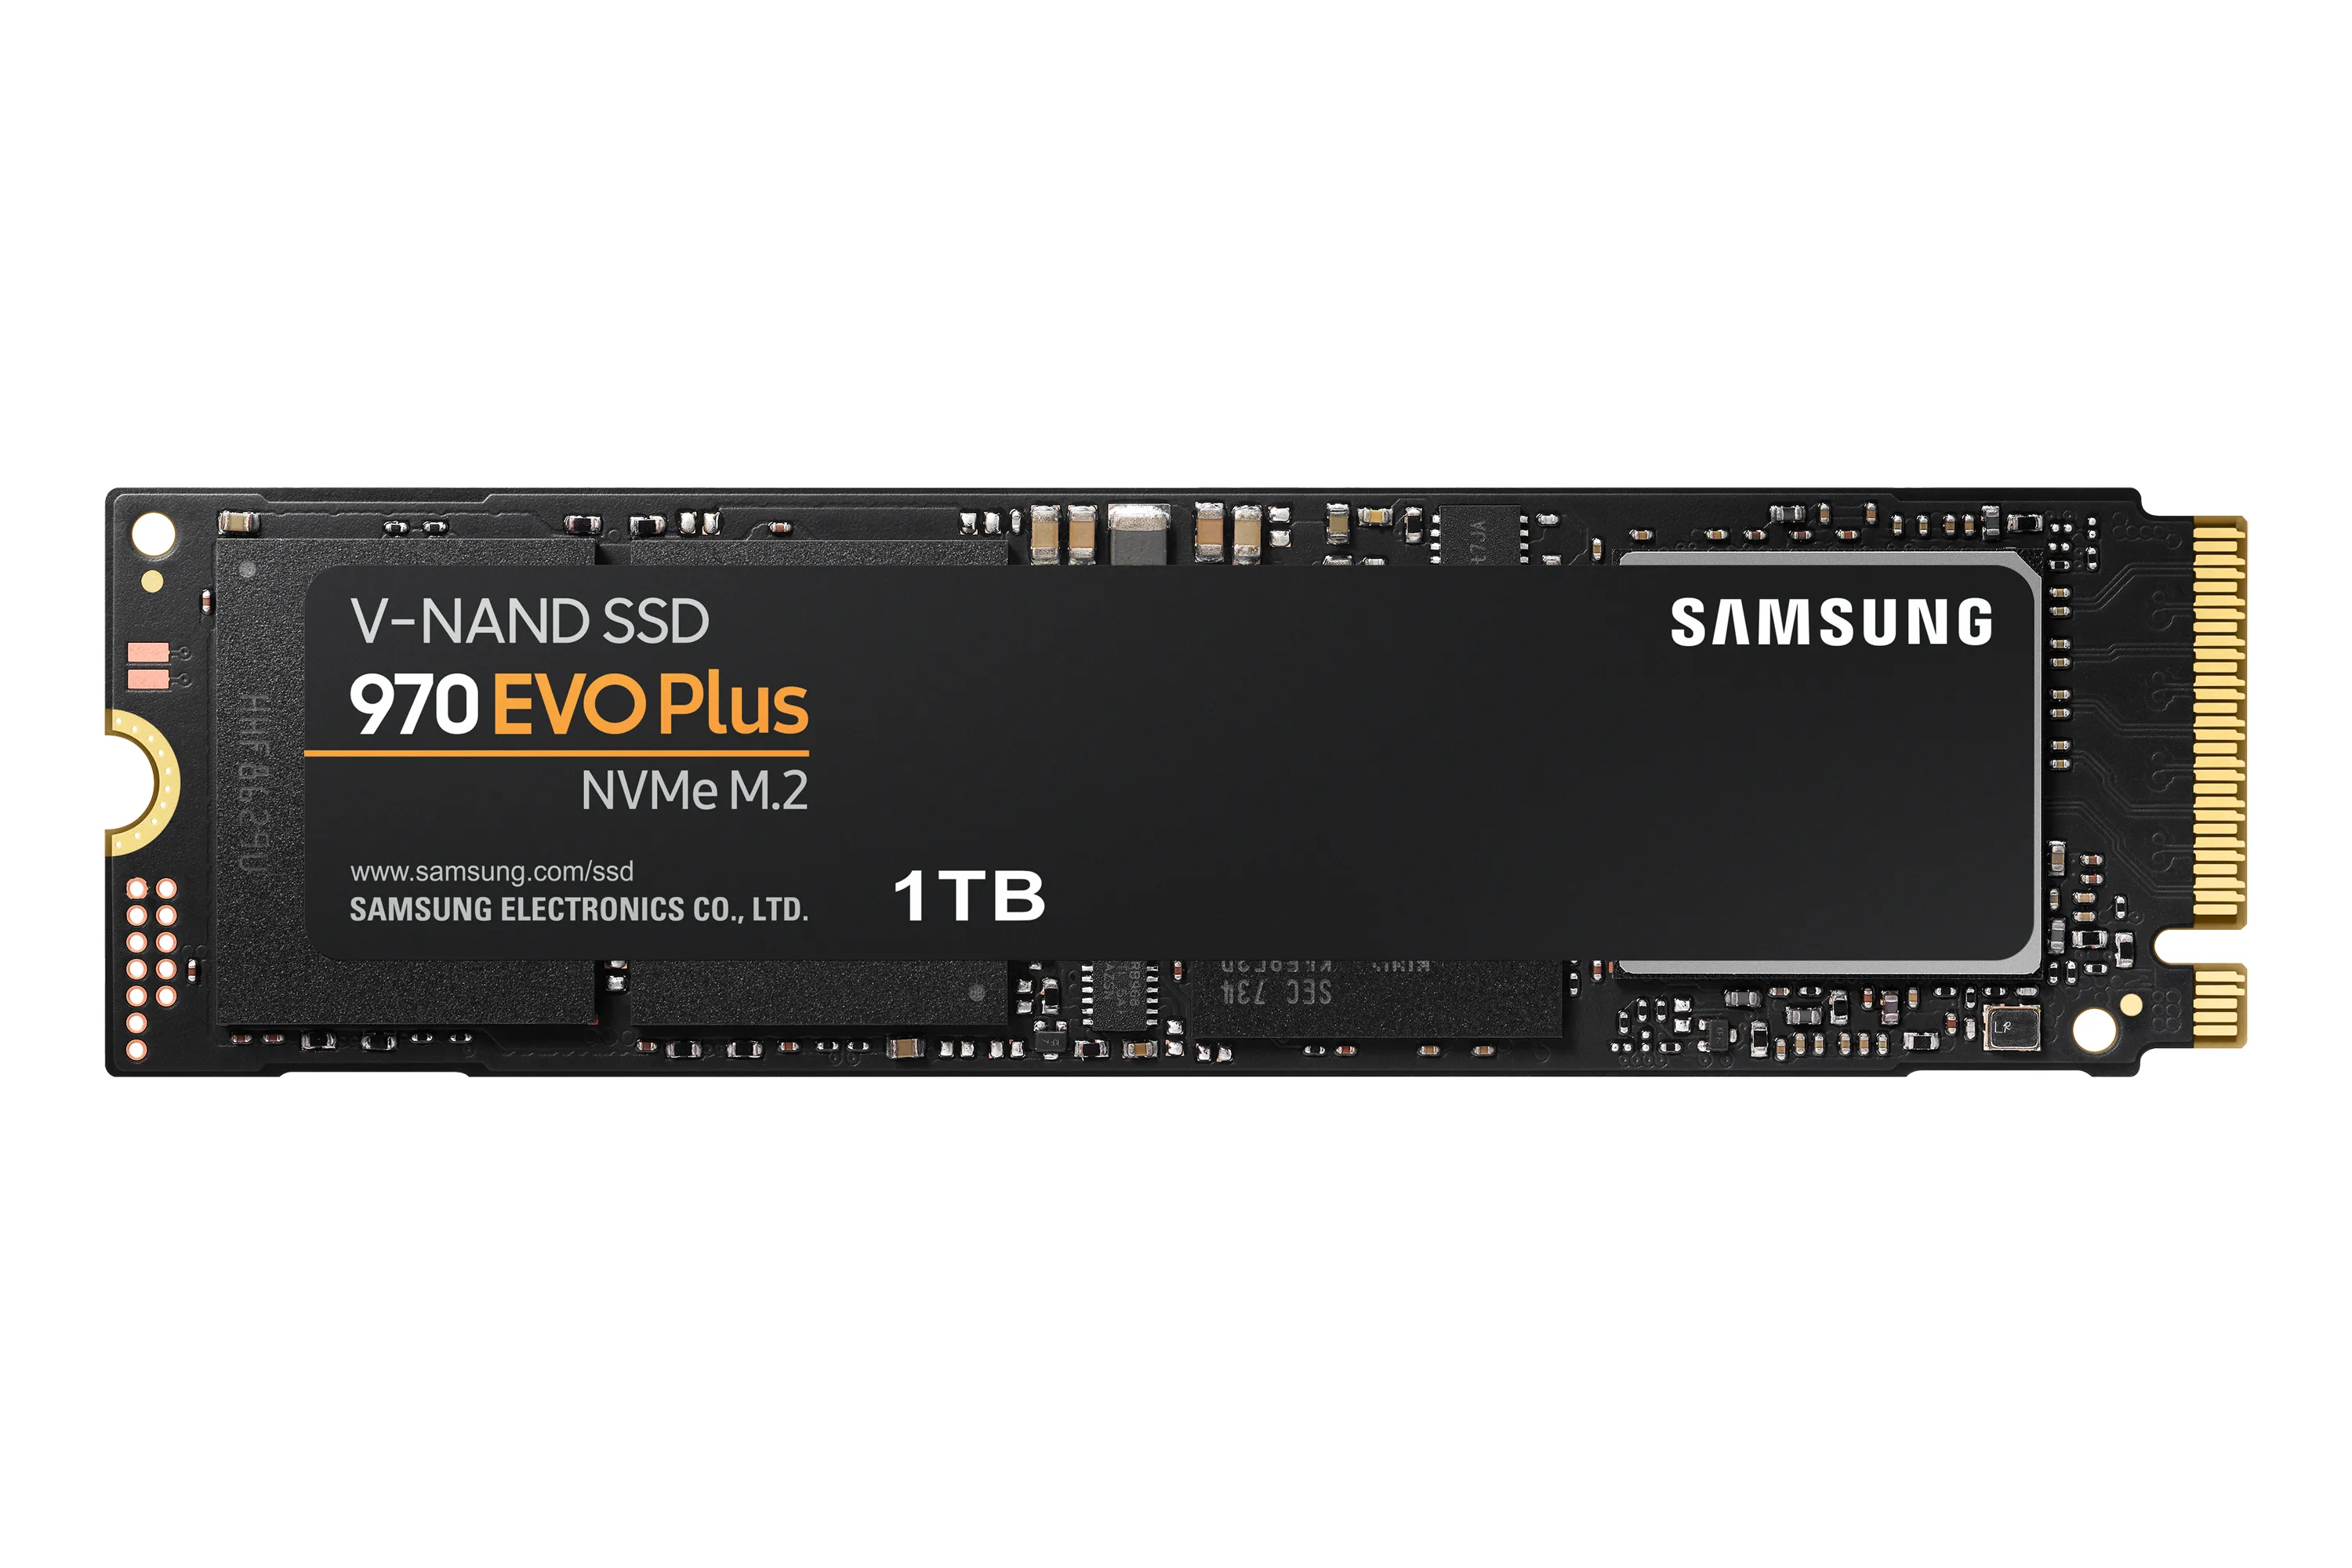  970 EVO Plus NVMe M.2 SSD 1 TB